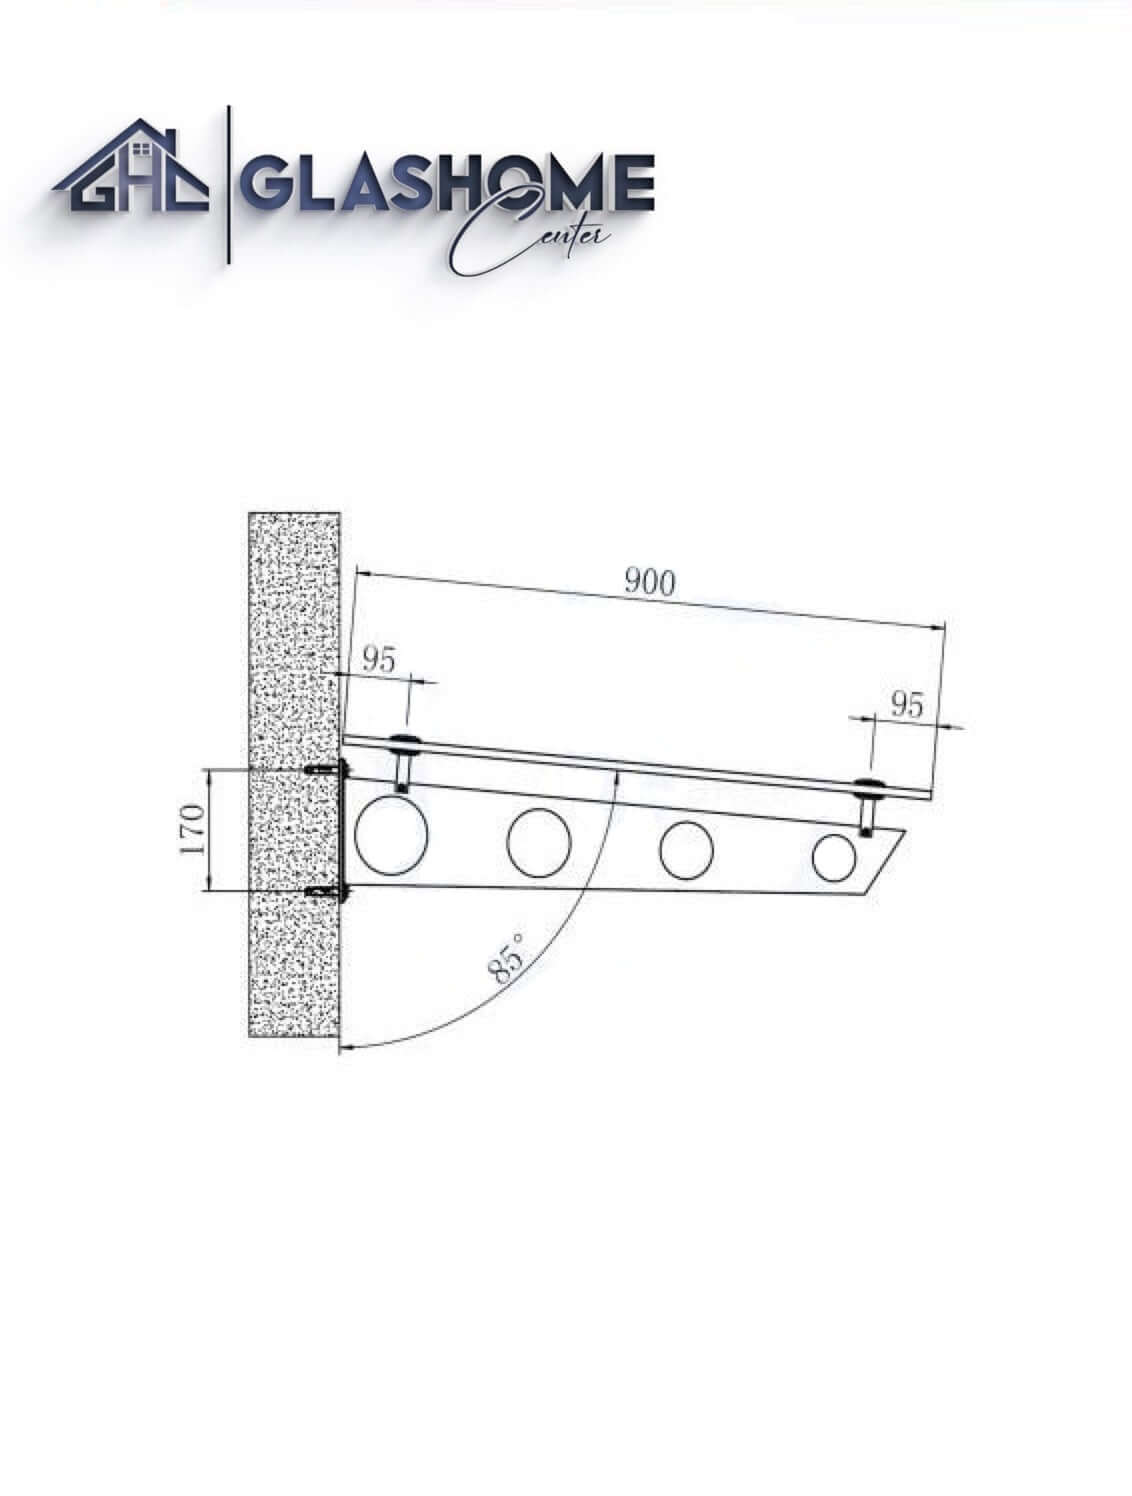 GlasHomeCenter - glass canopy - Clear glass - 250x90cm - 13.1mm VSG - incl. 3 schwarze Edelstahlhalterungen Variante "Stockholm"